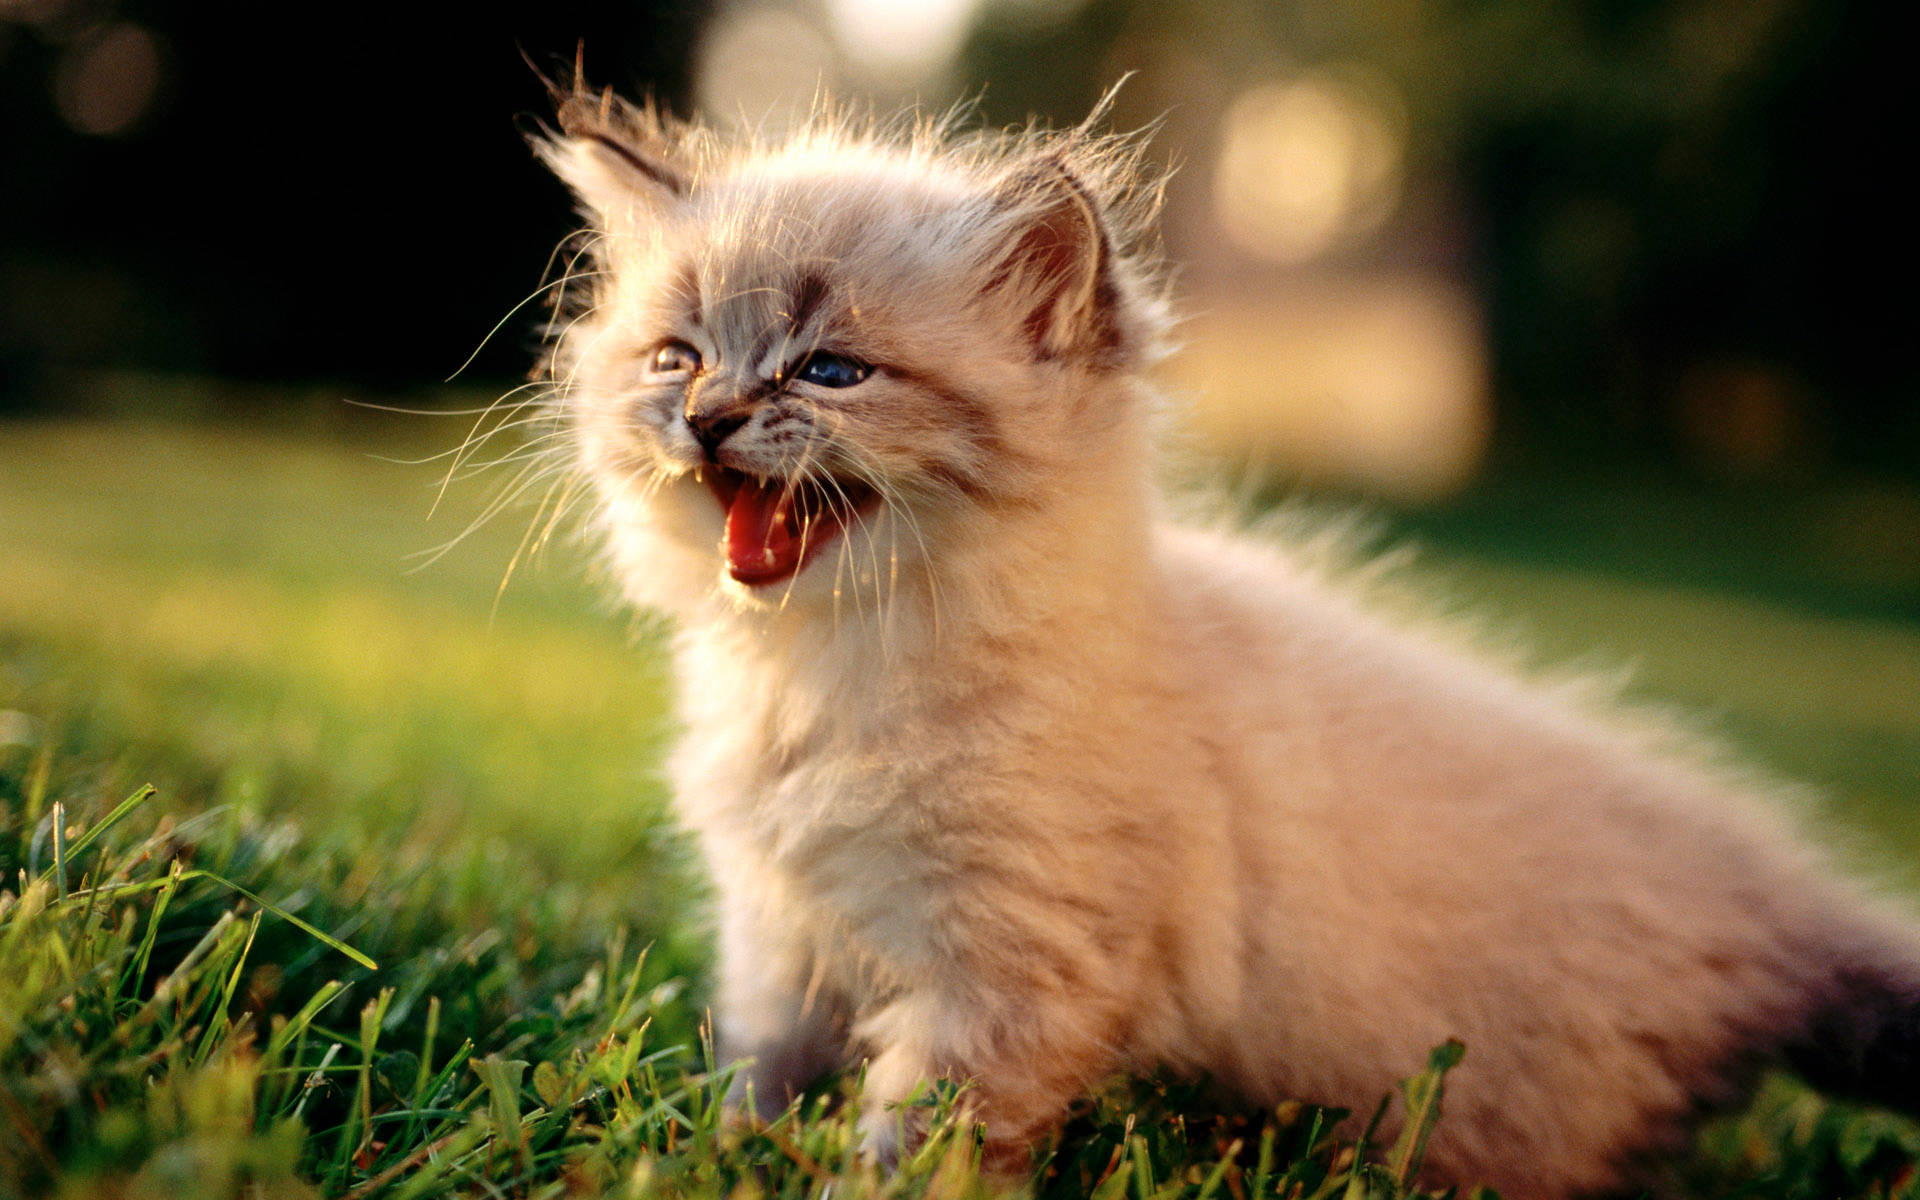 Cute Kitty Meowing In The Field Wallpaper